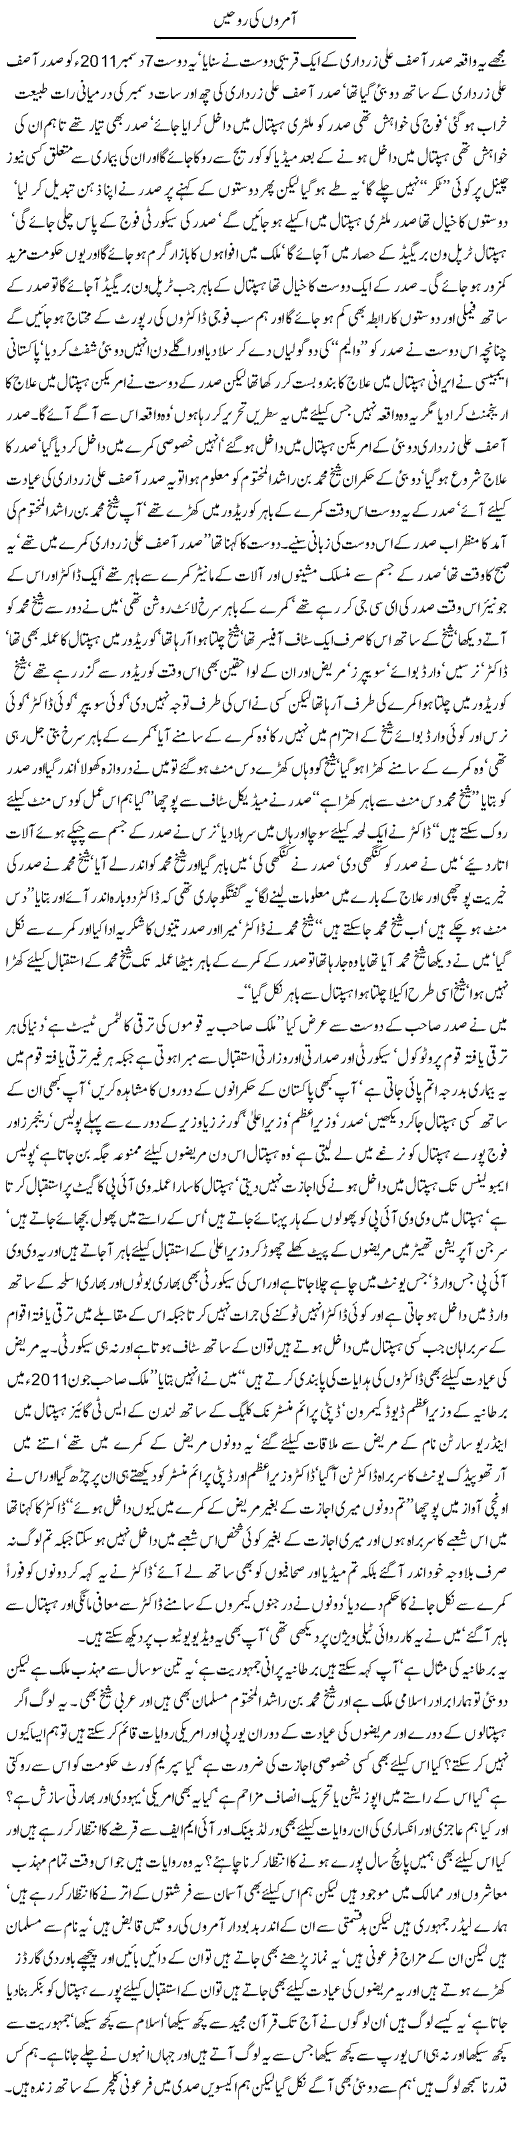 Dictators and Zardari Express Column Javed Chaudhry 8 January 2012